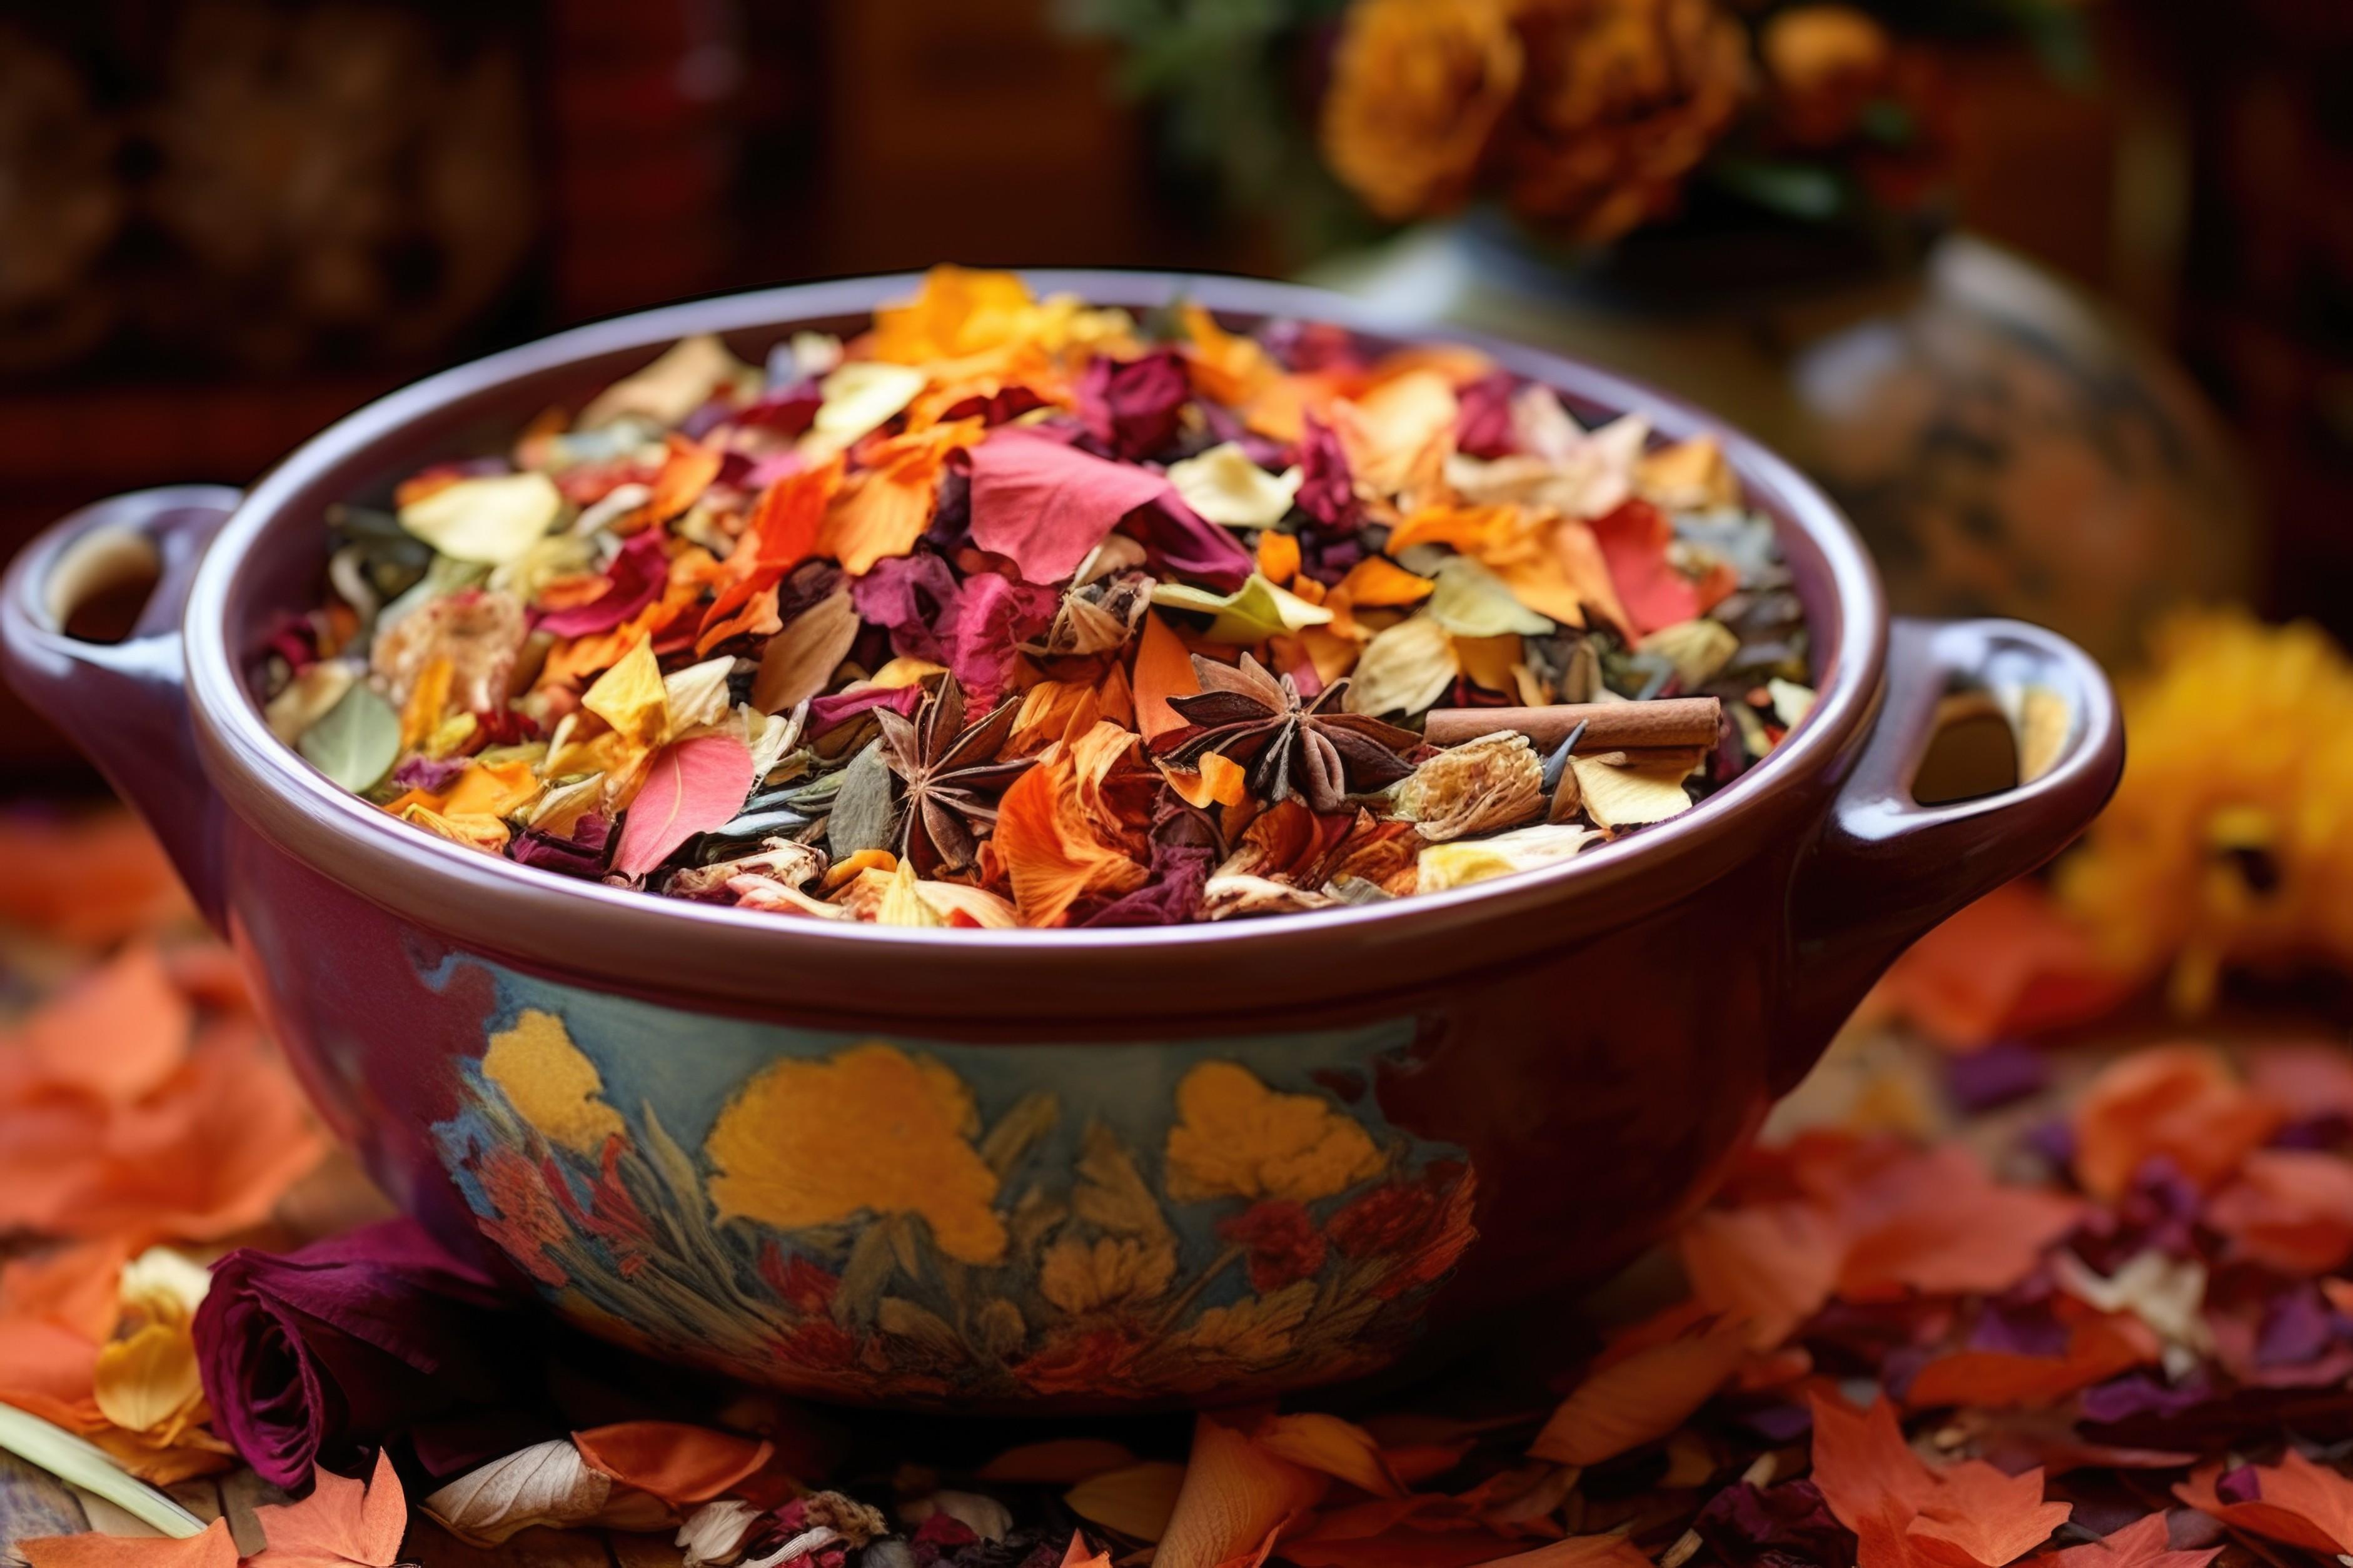 decorated-potpourri-bowl-with-autumn-colors (1).jpg